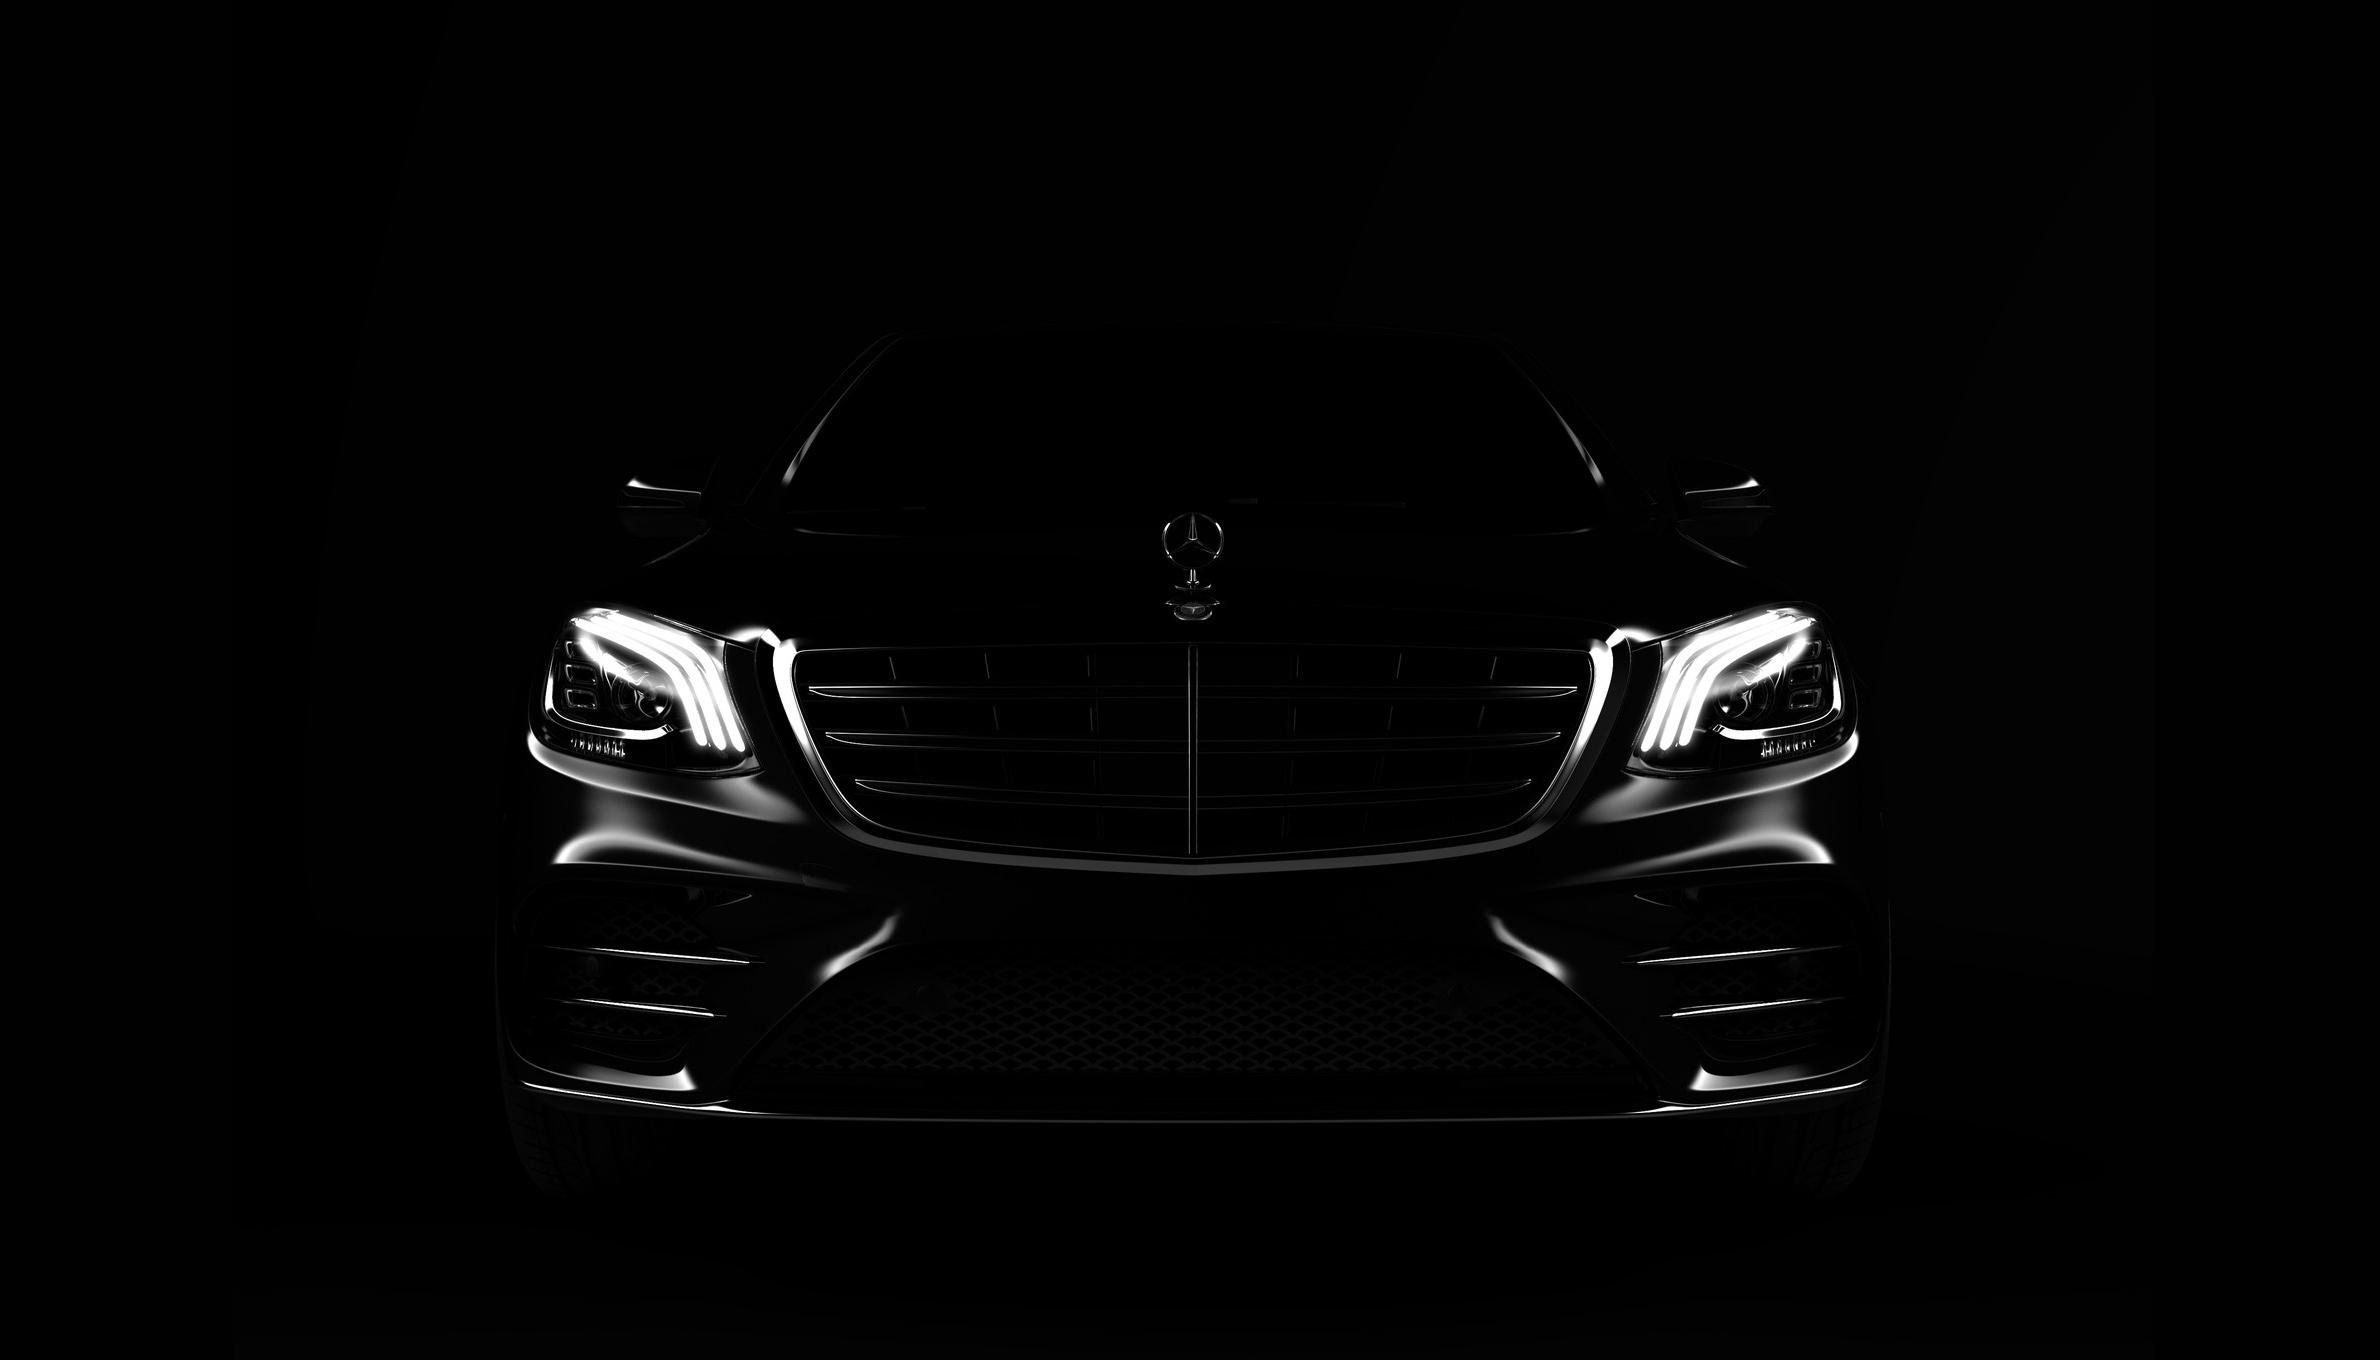 General 2380x1360 dark car vehicle Mercedes-Benz artwork simple background Mercedes-Benz S-Class headlights frontal view black cars